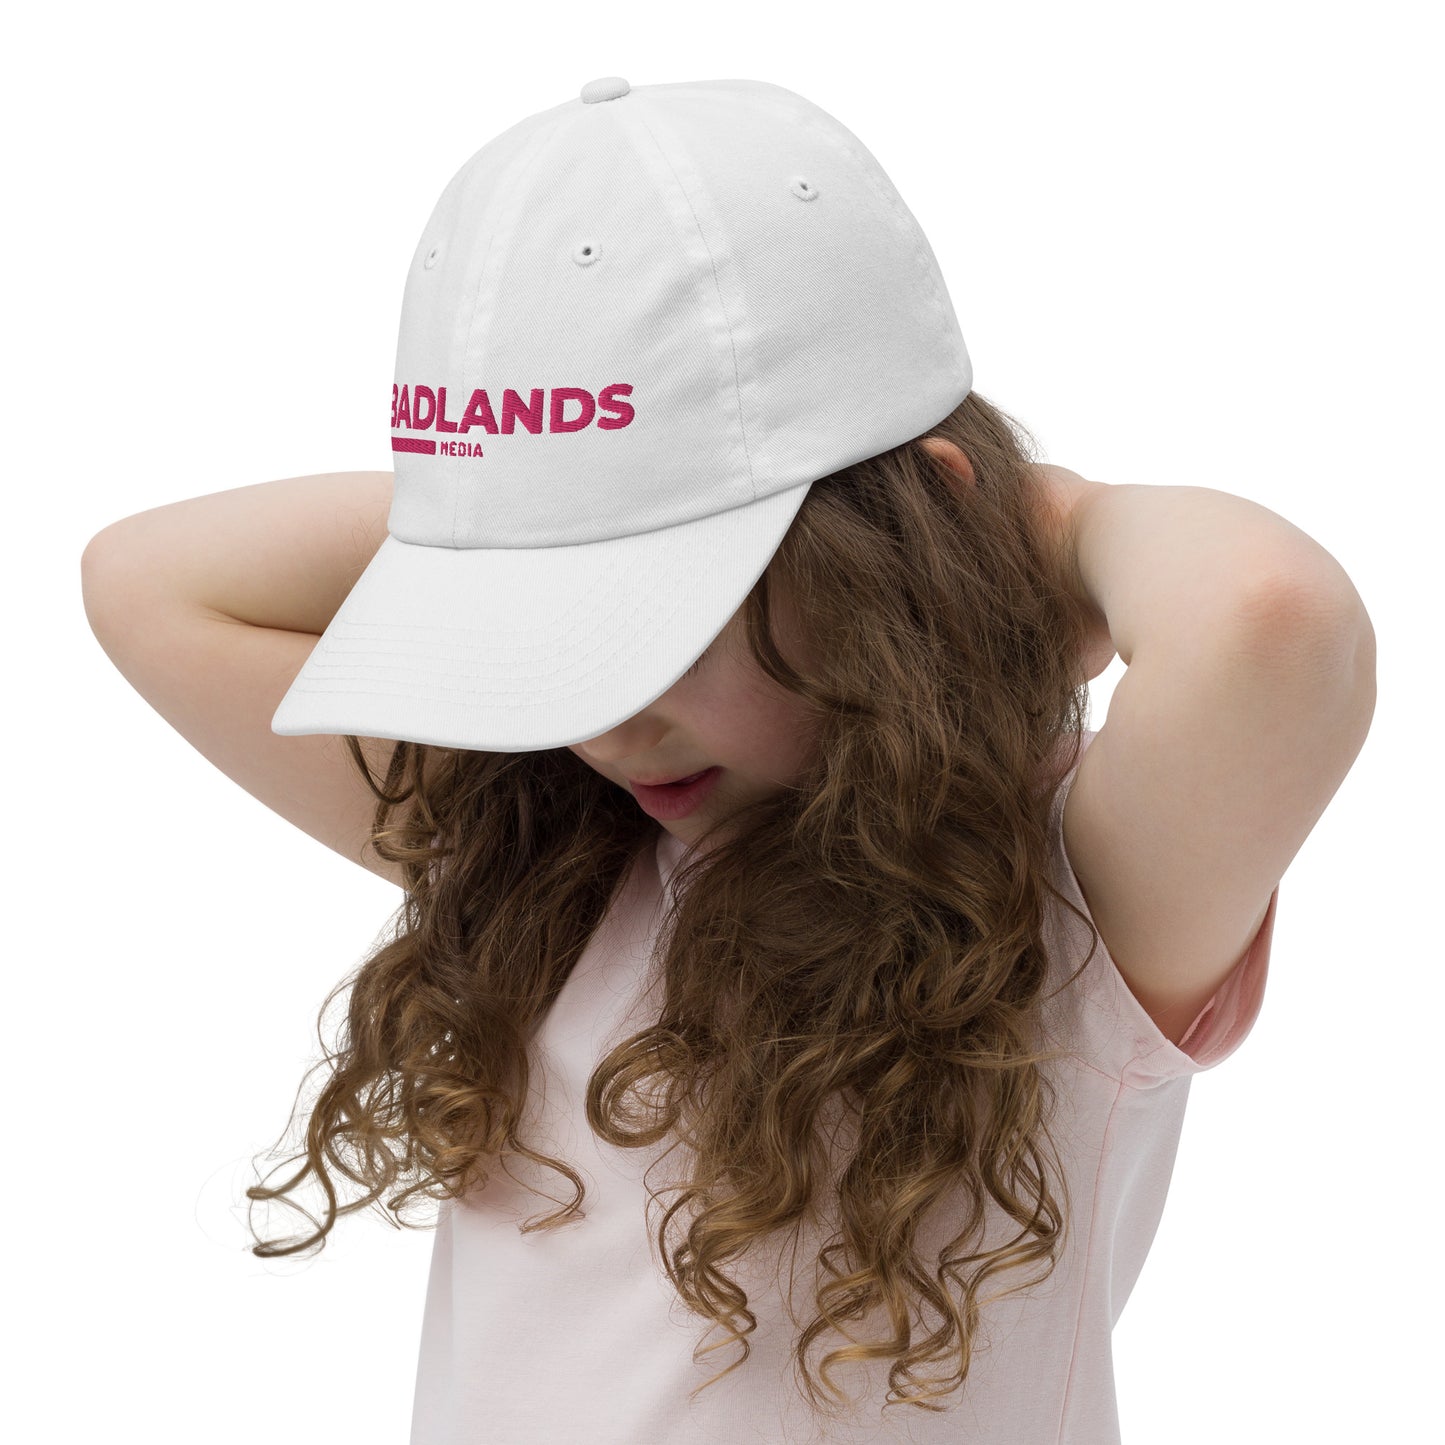 Badlands Kids Baseball Cap (pink logo)